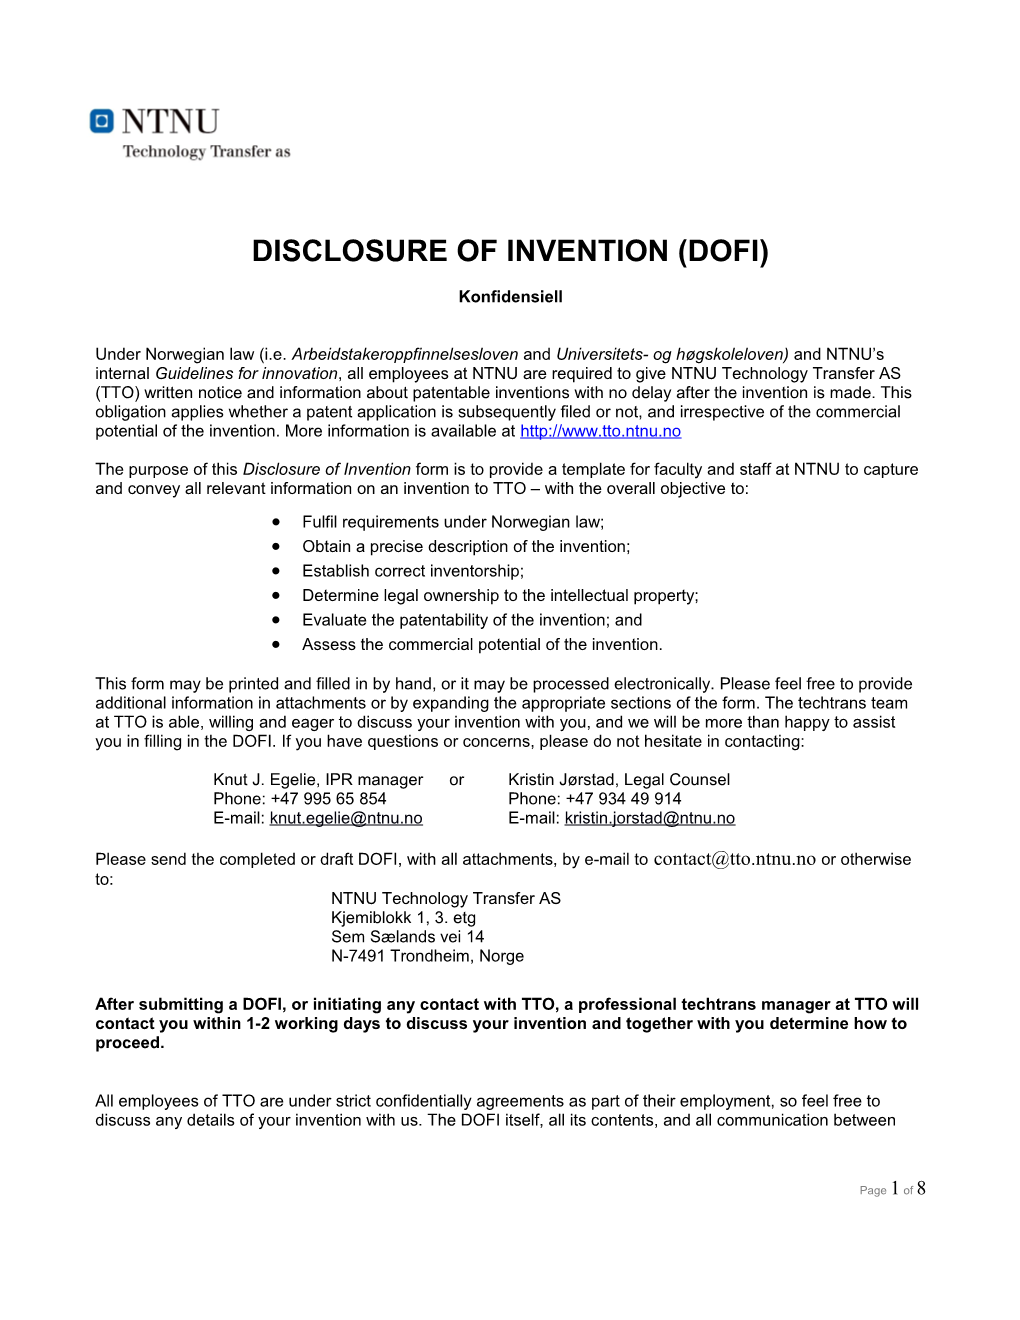 Disclosure of Invention (Dofi)